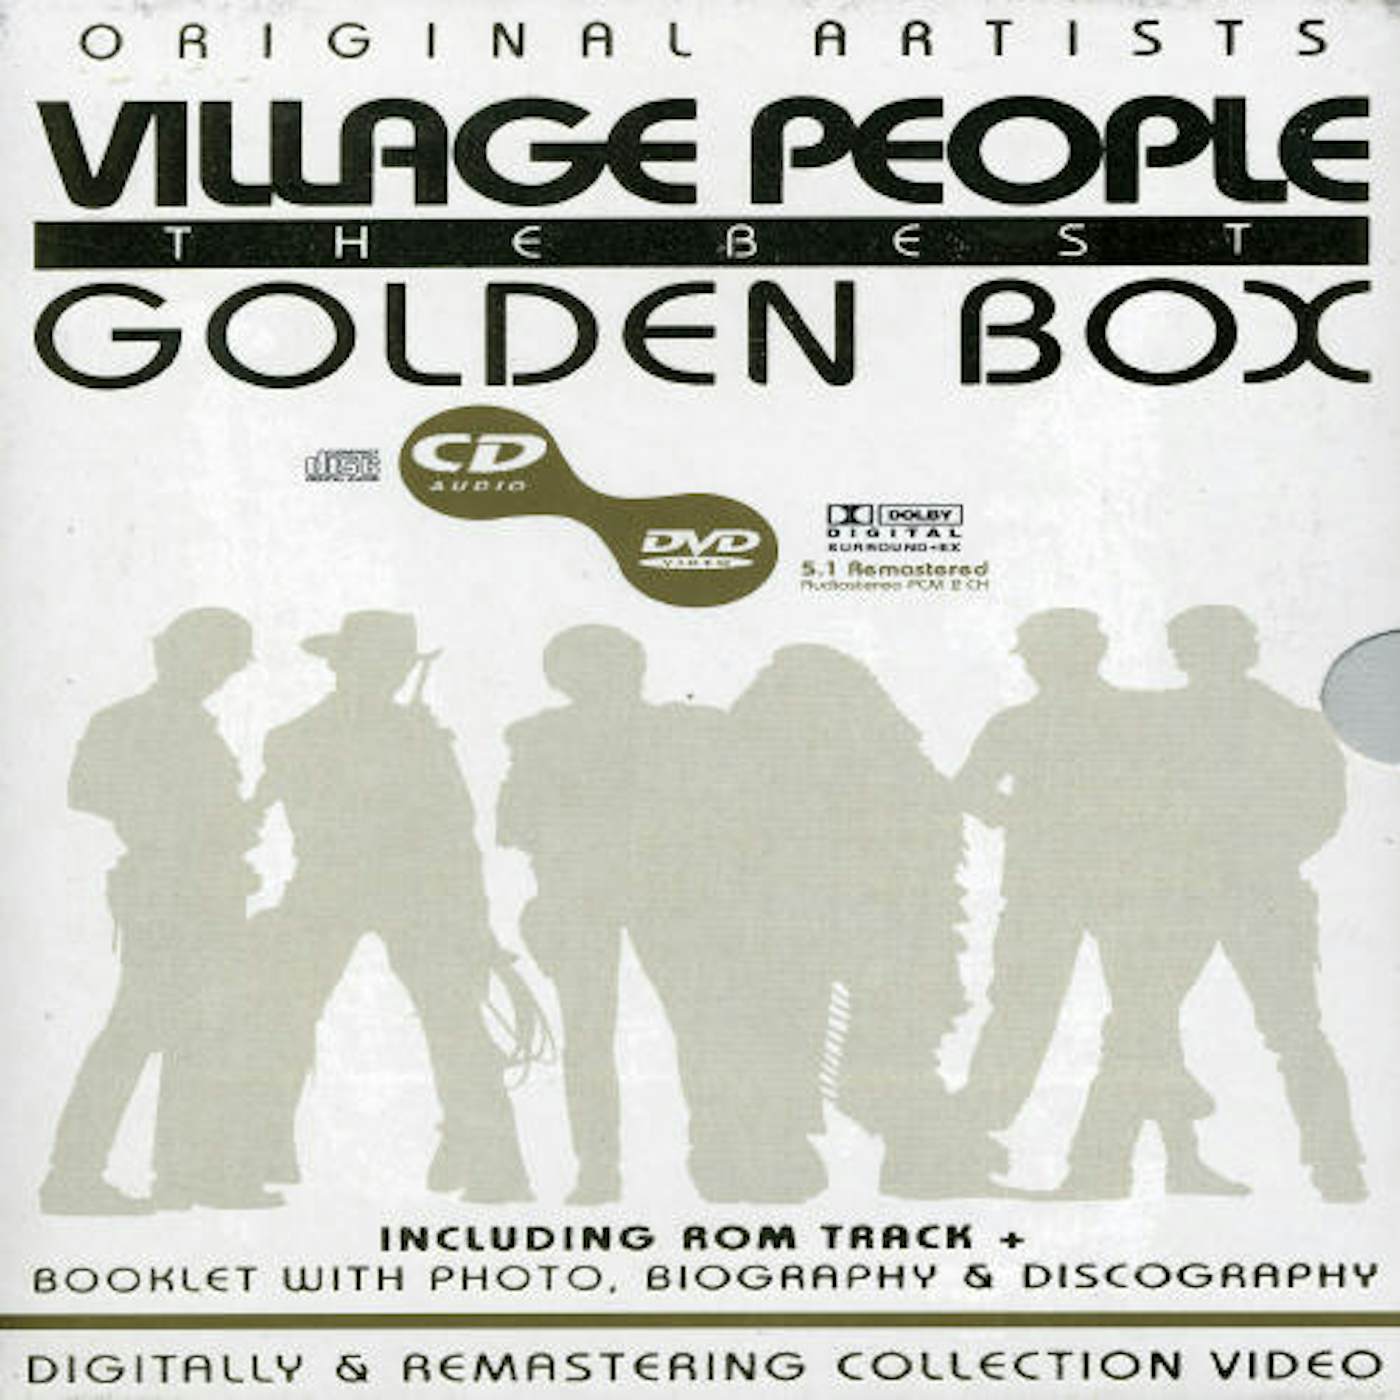 People Golden песня. Golden people производитель. Village people - the best - Golden Box covrik. Village people DVD Cover. Good as gold three laws